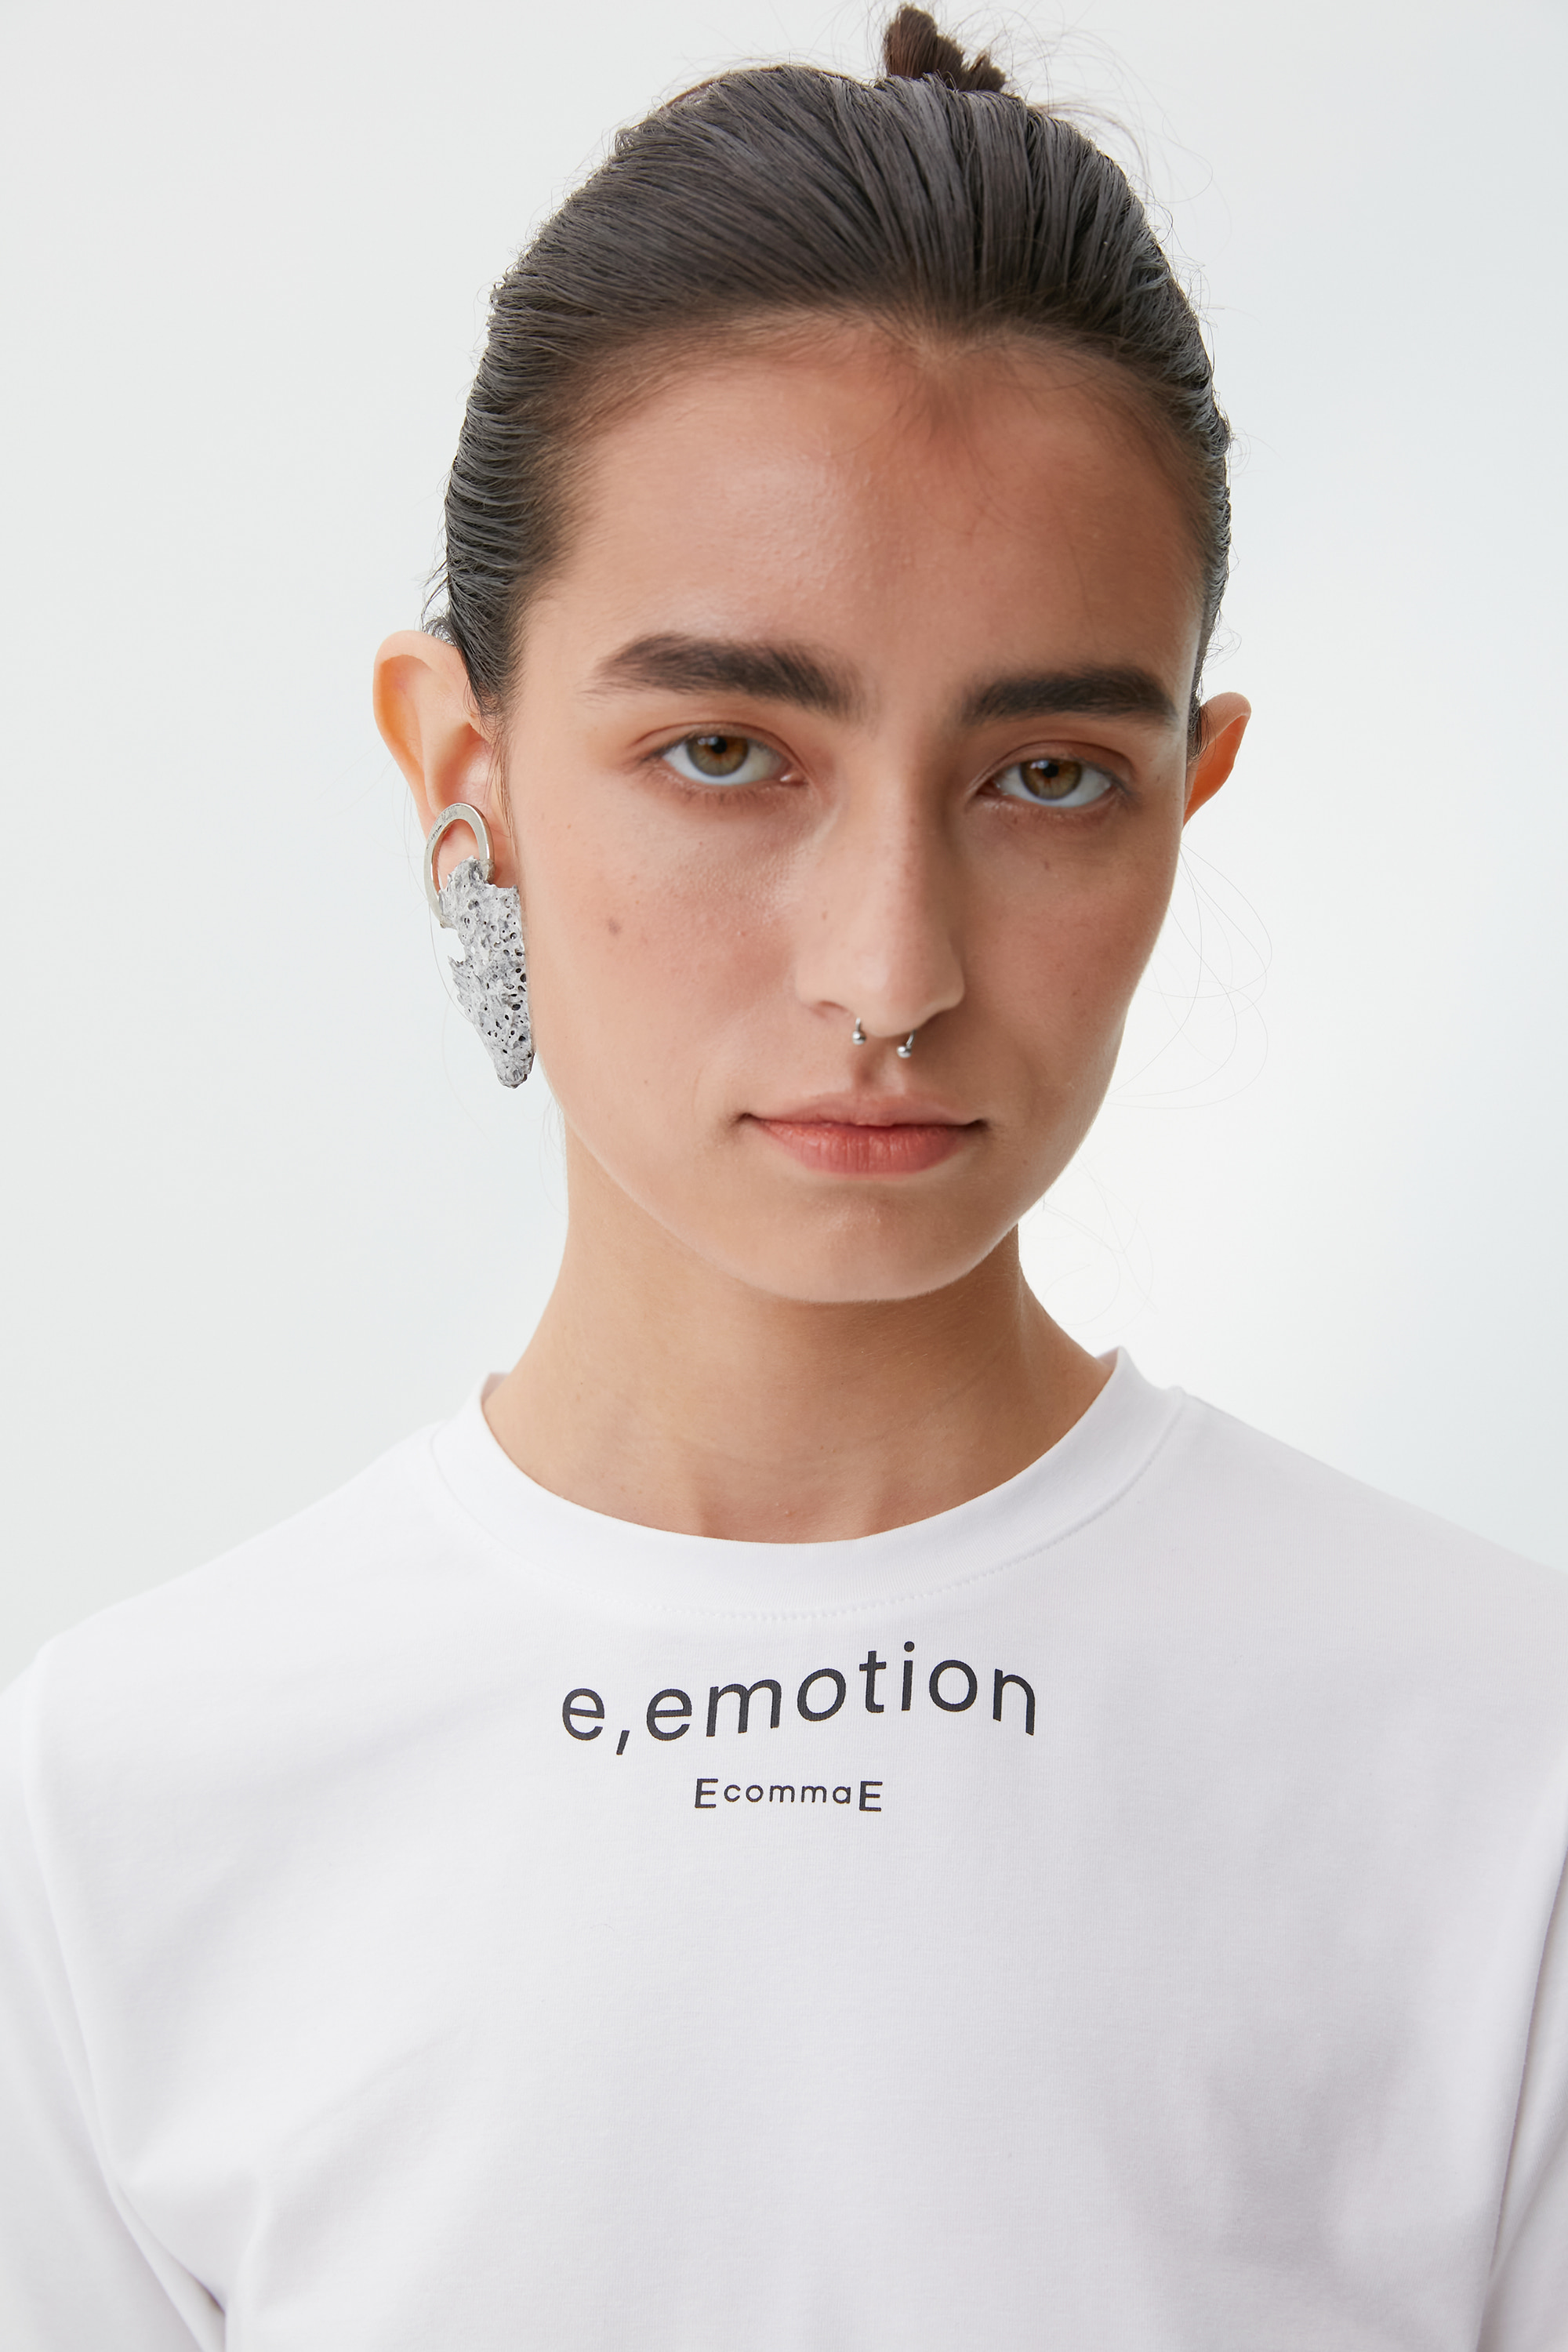 e,emotion T-SHIRT (WHITE)